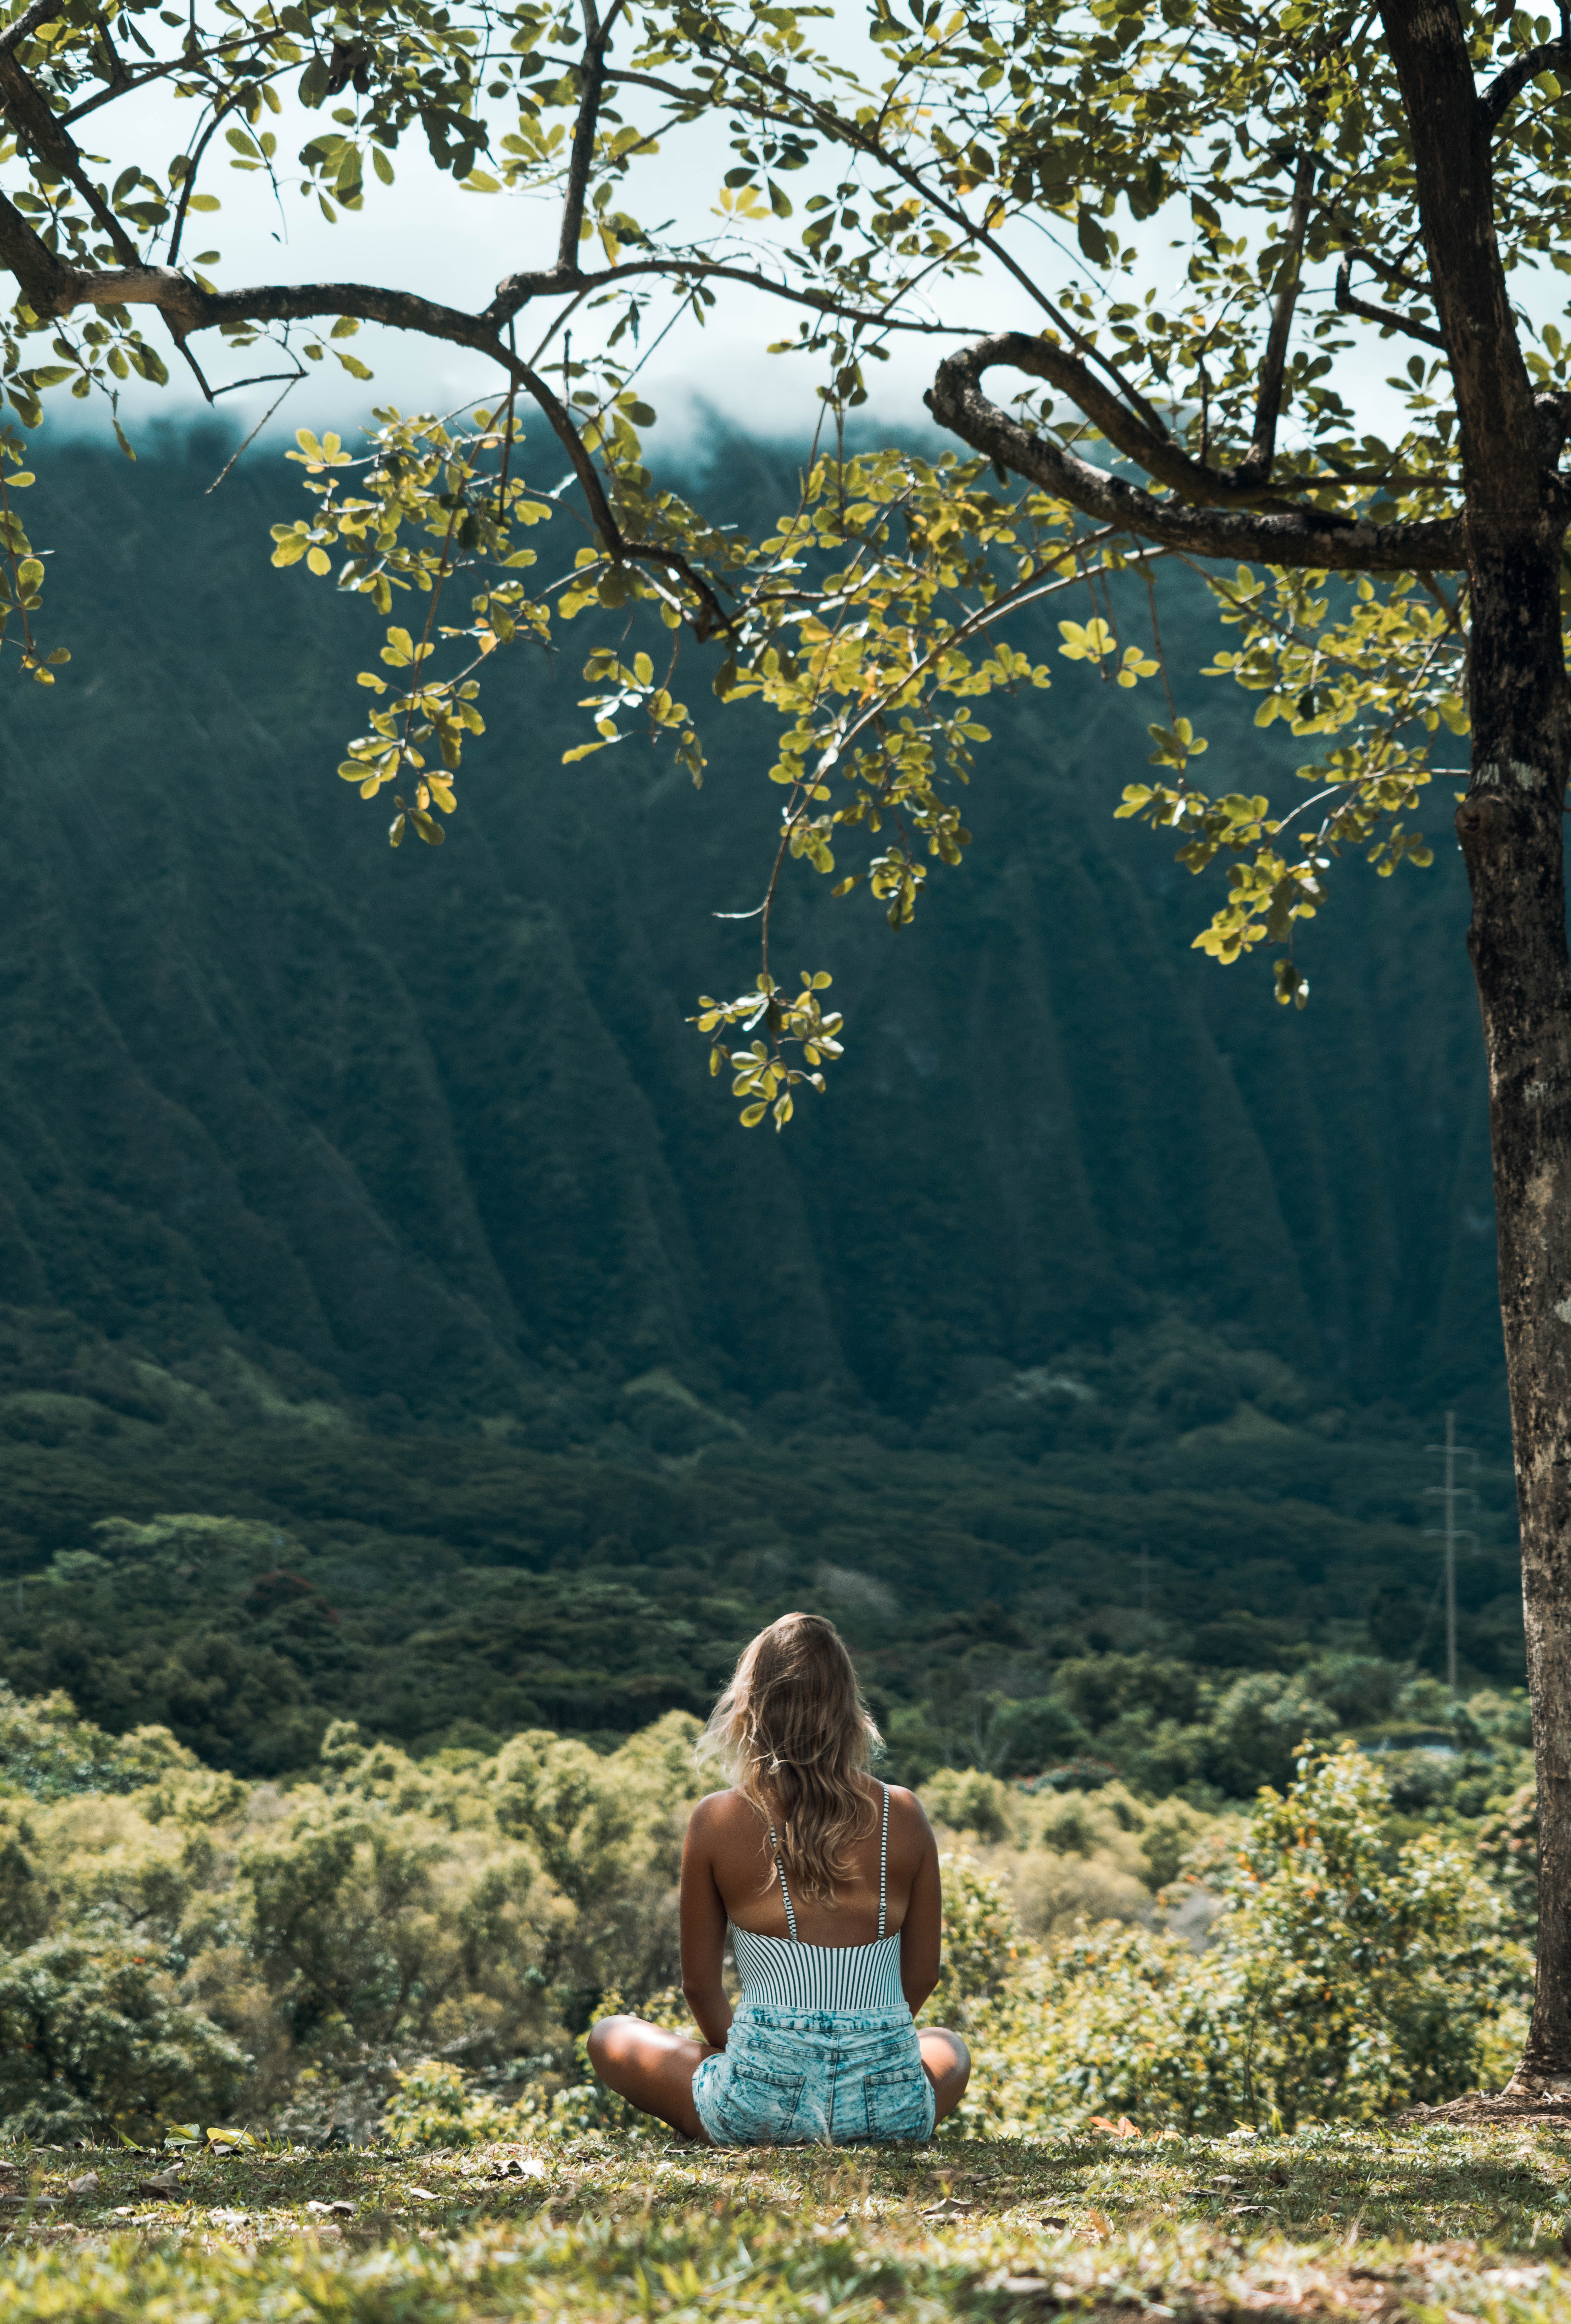 Woman meditating in a beautiful nature scene.